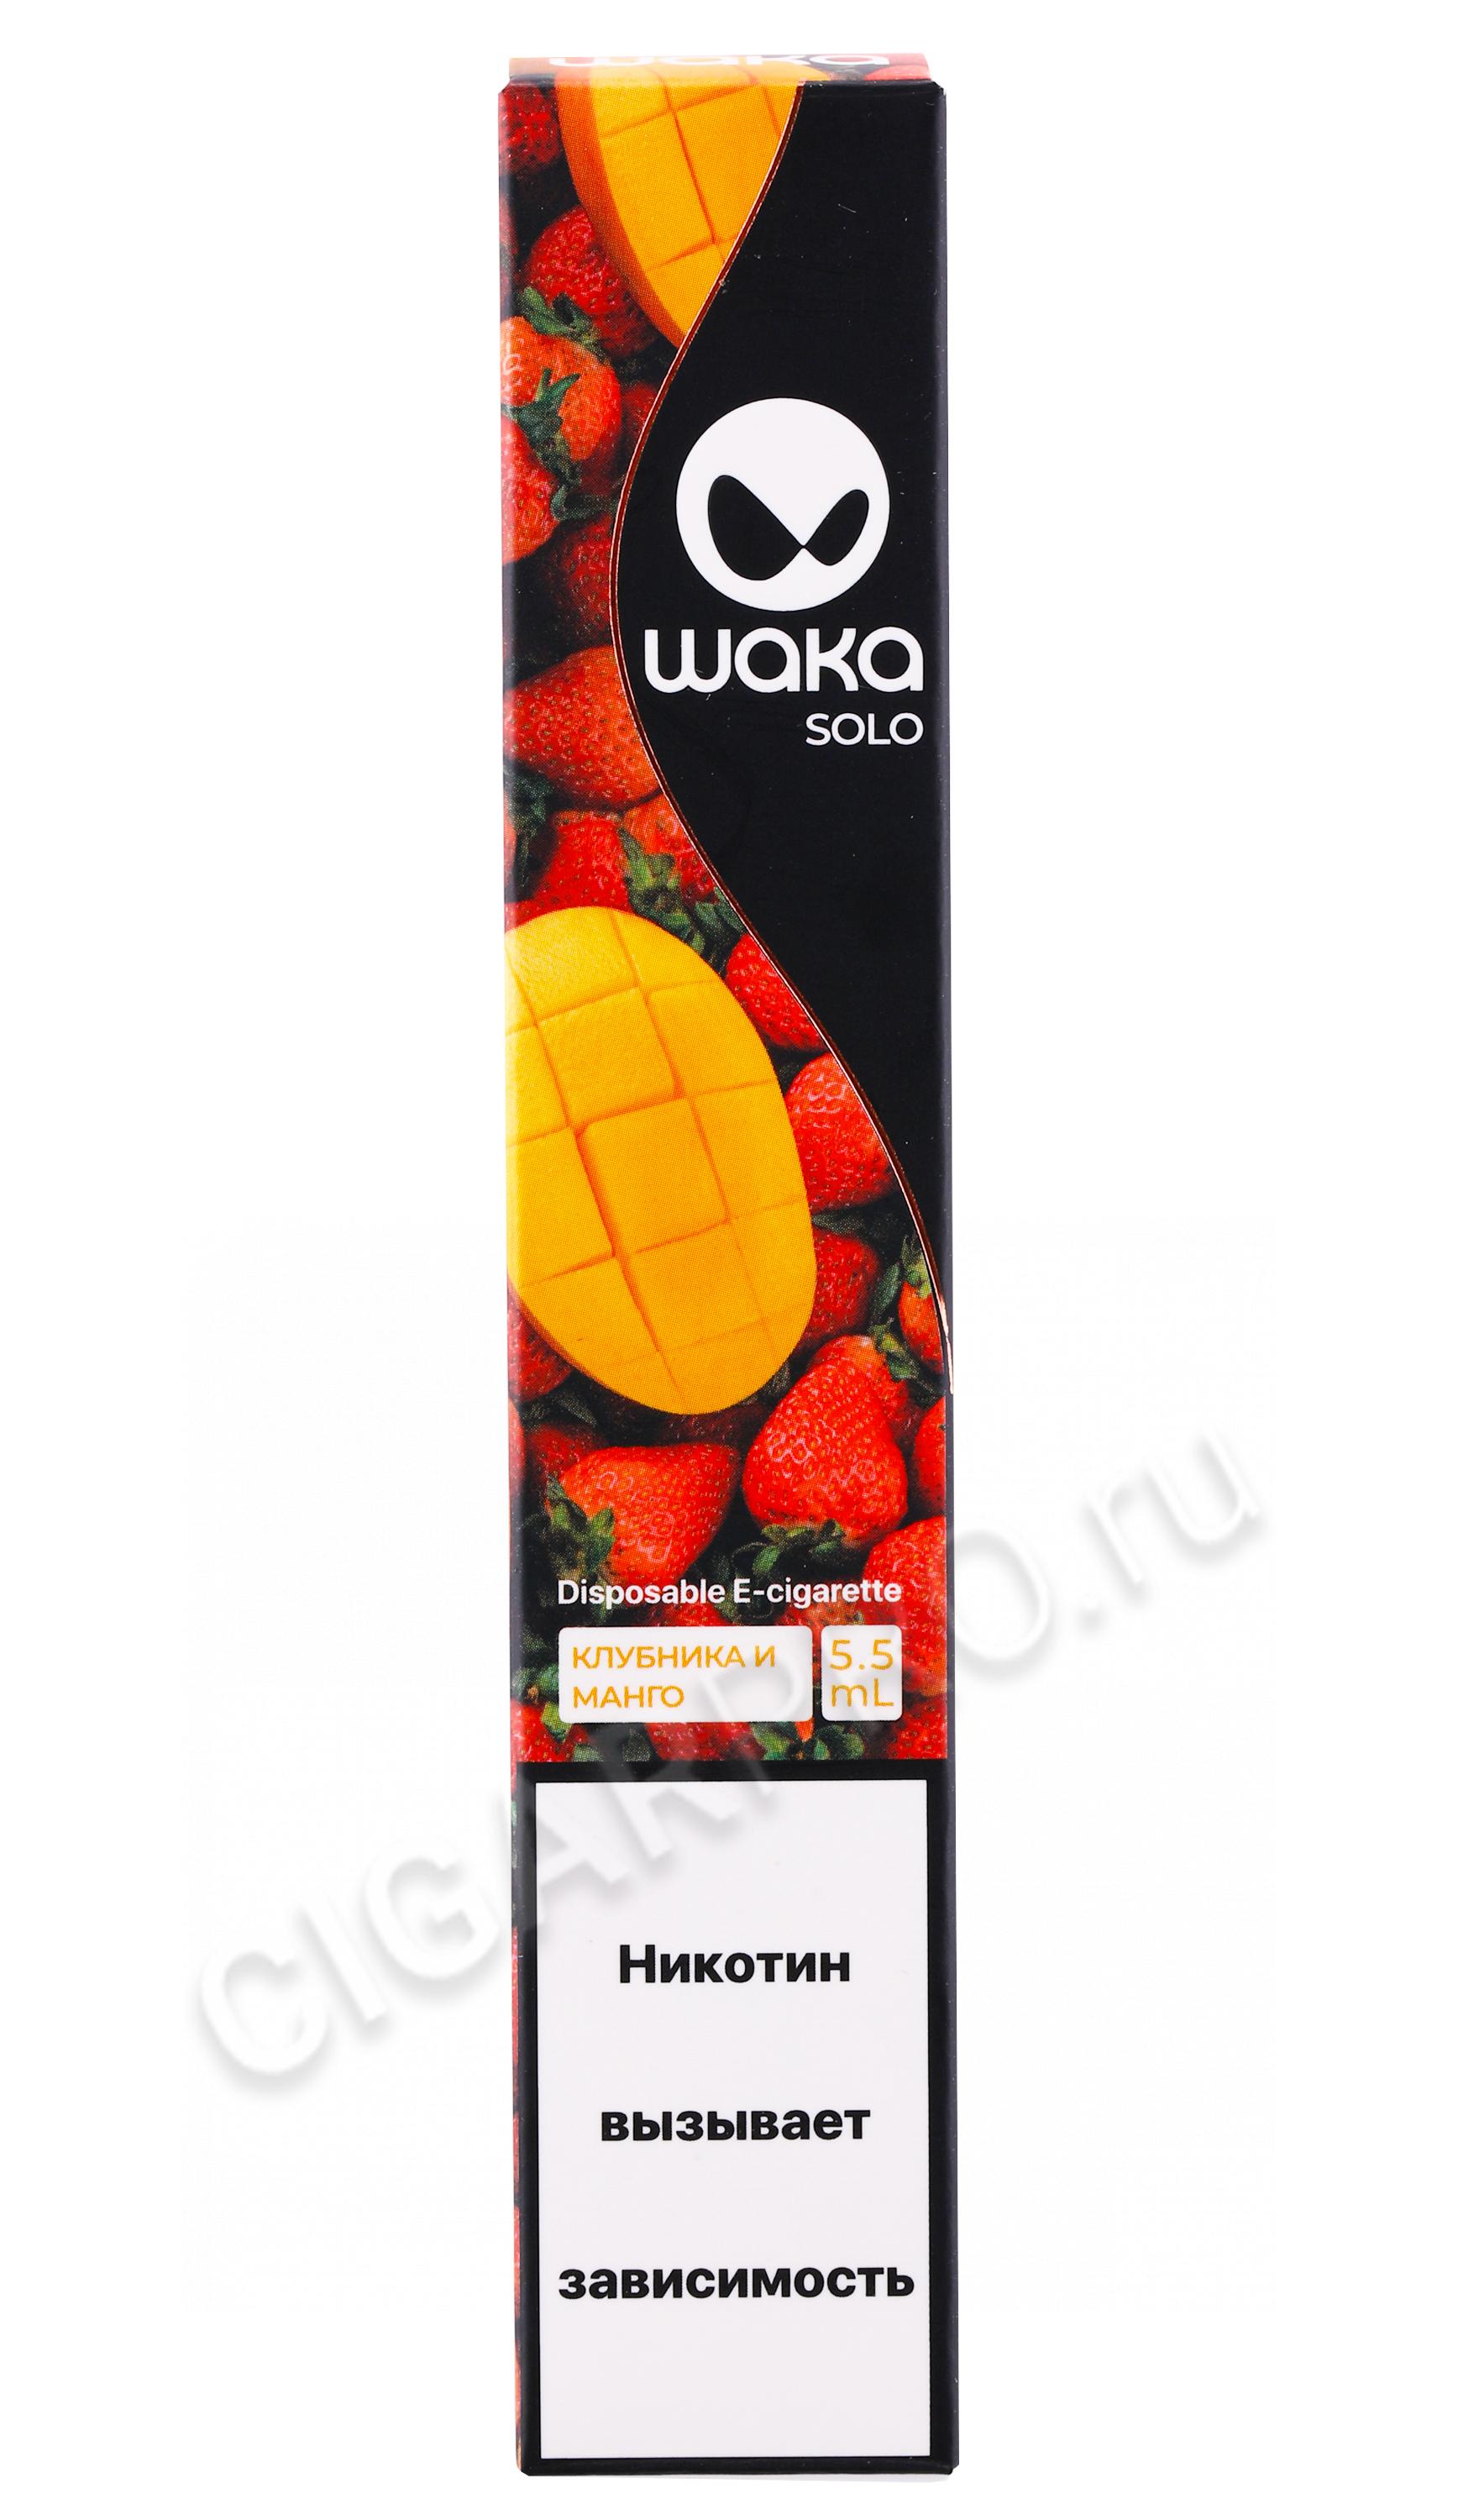 Waka 1800. Waka электронная сигарета 1800. Waka solo электронная сигарета. Waka Strawberry Mango электронная сигарета. Waka электронная сигарета манго клубника.